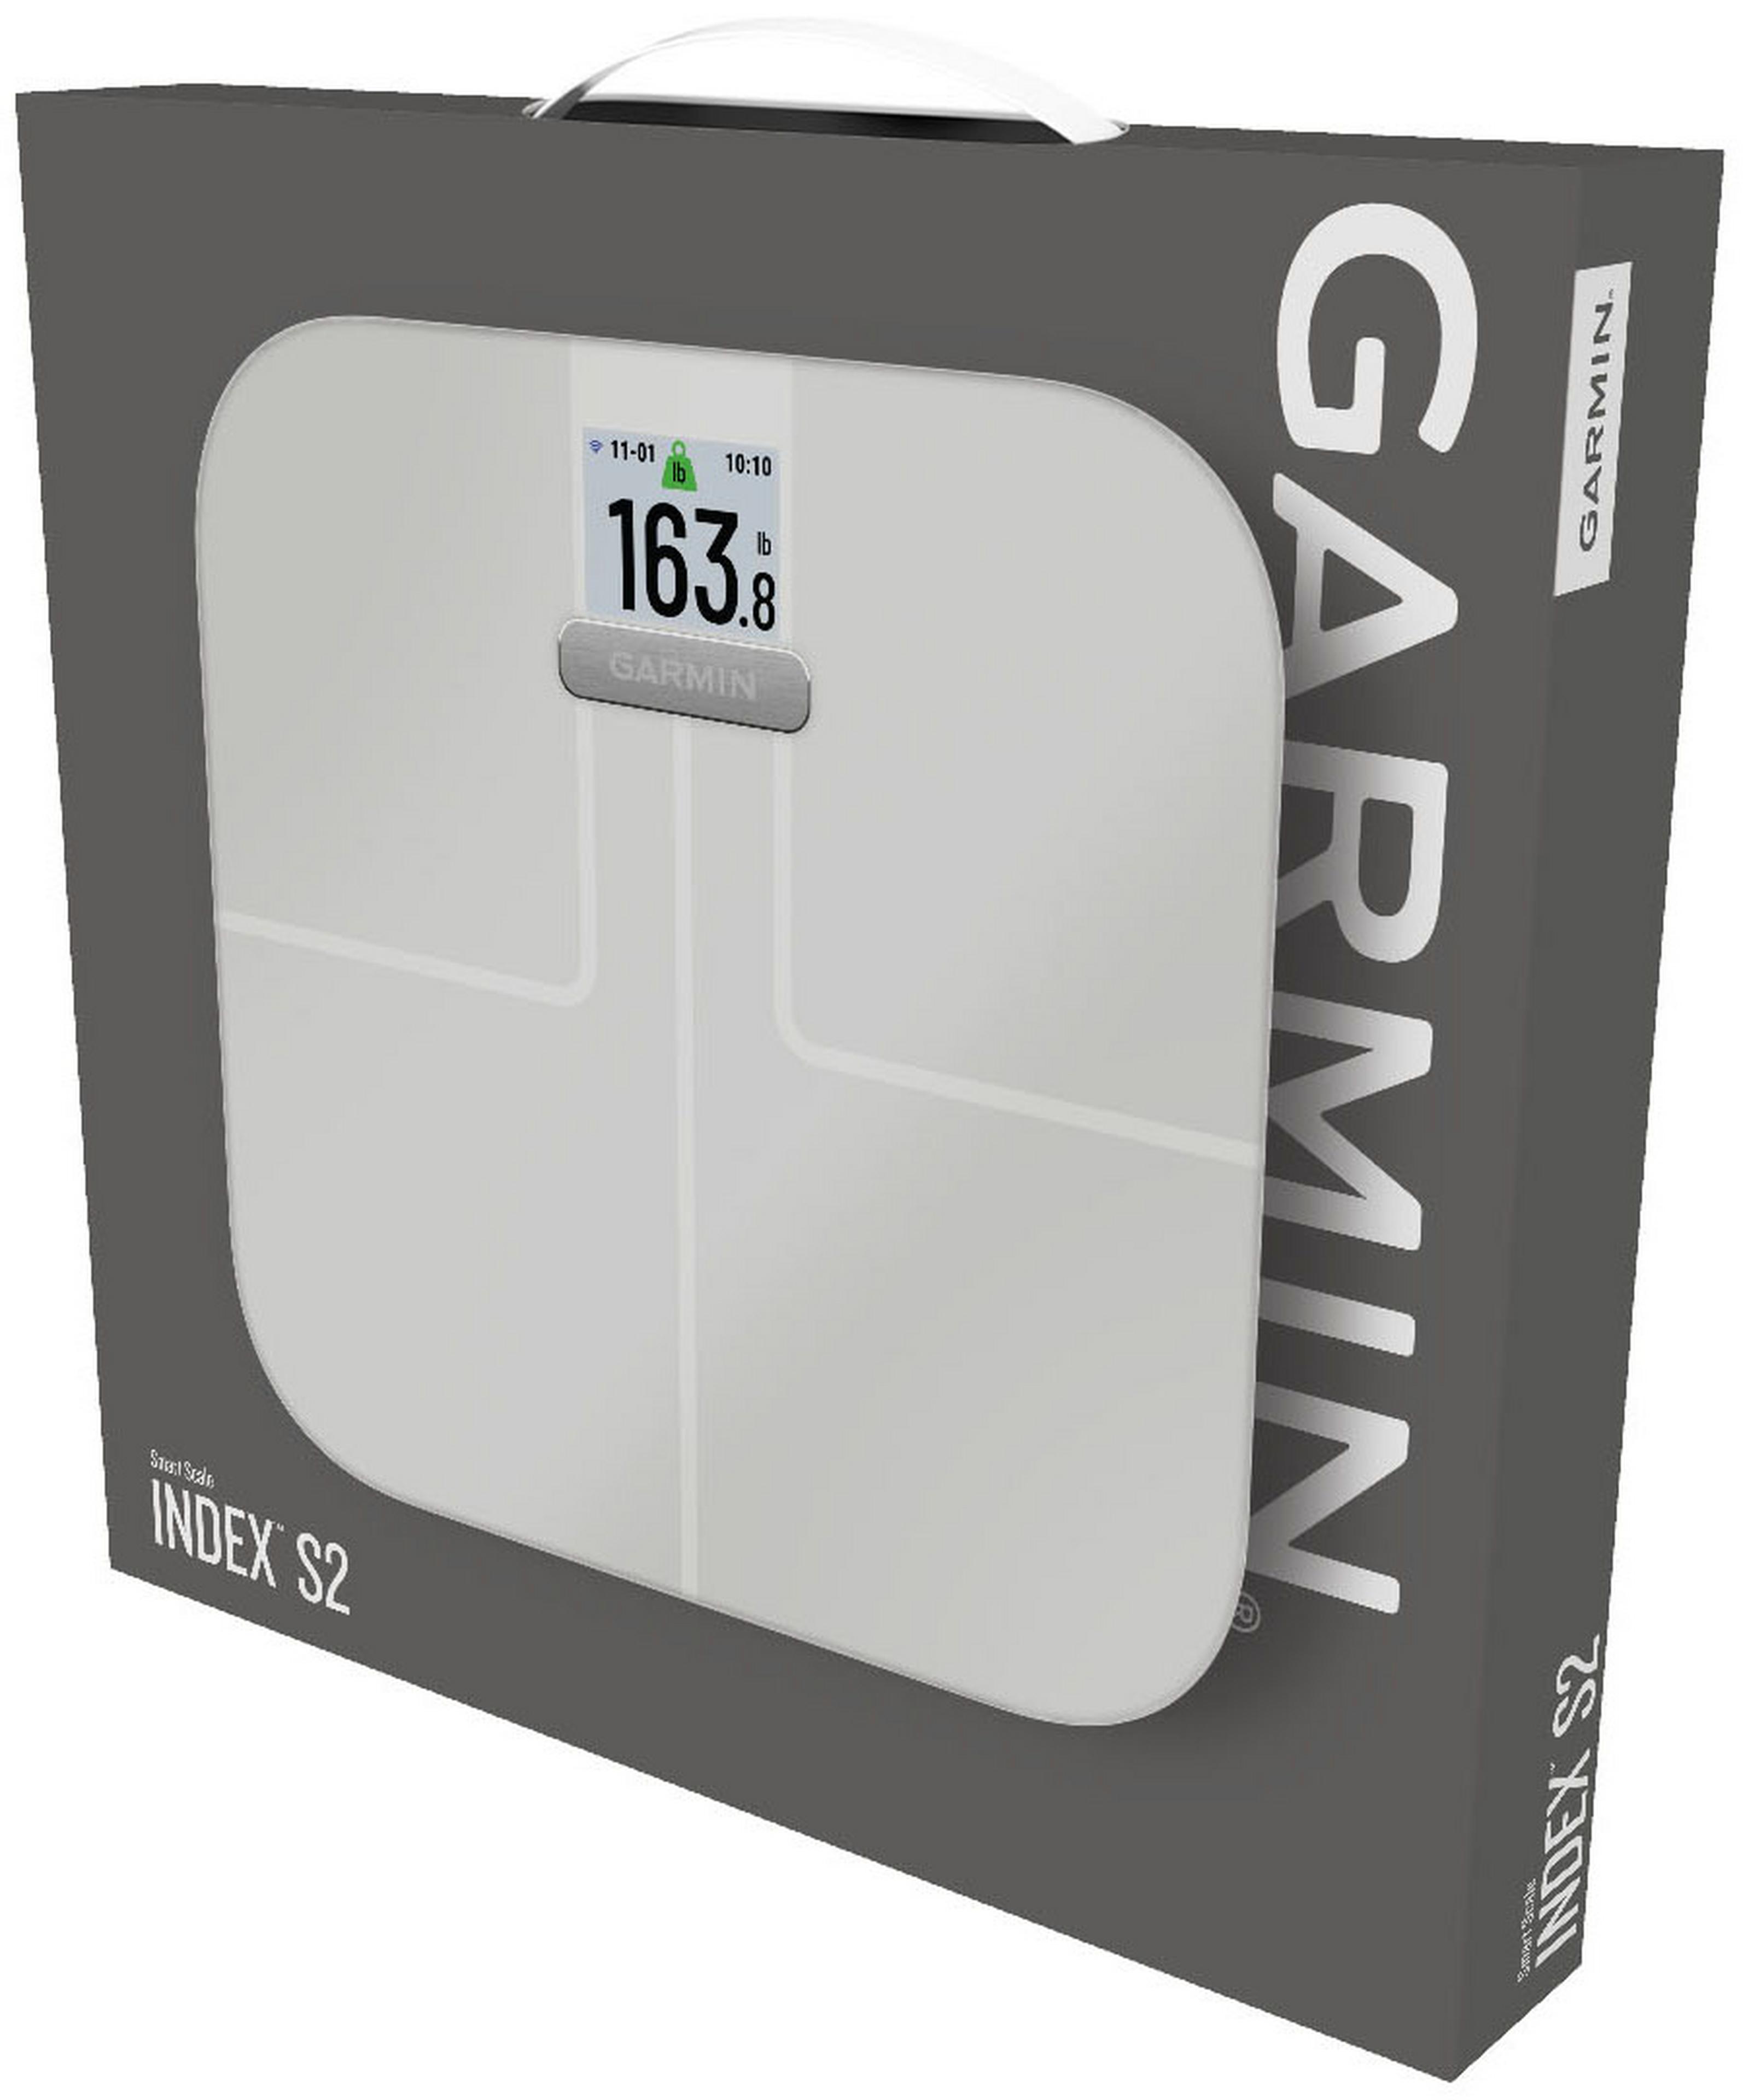 Garmin Index S2 Smart Scale | Wiggle